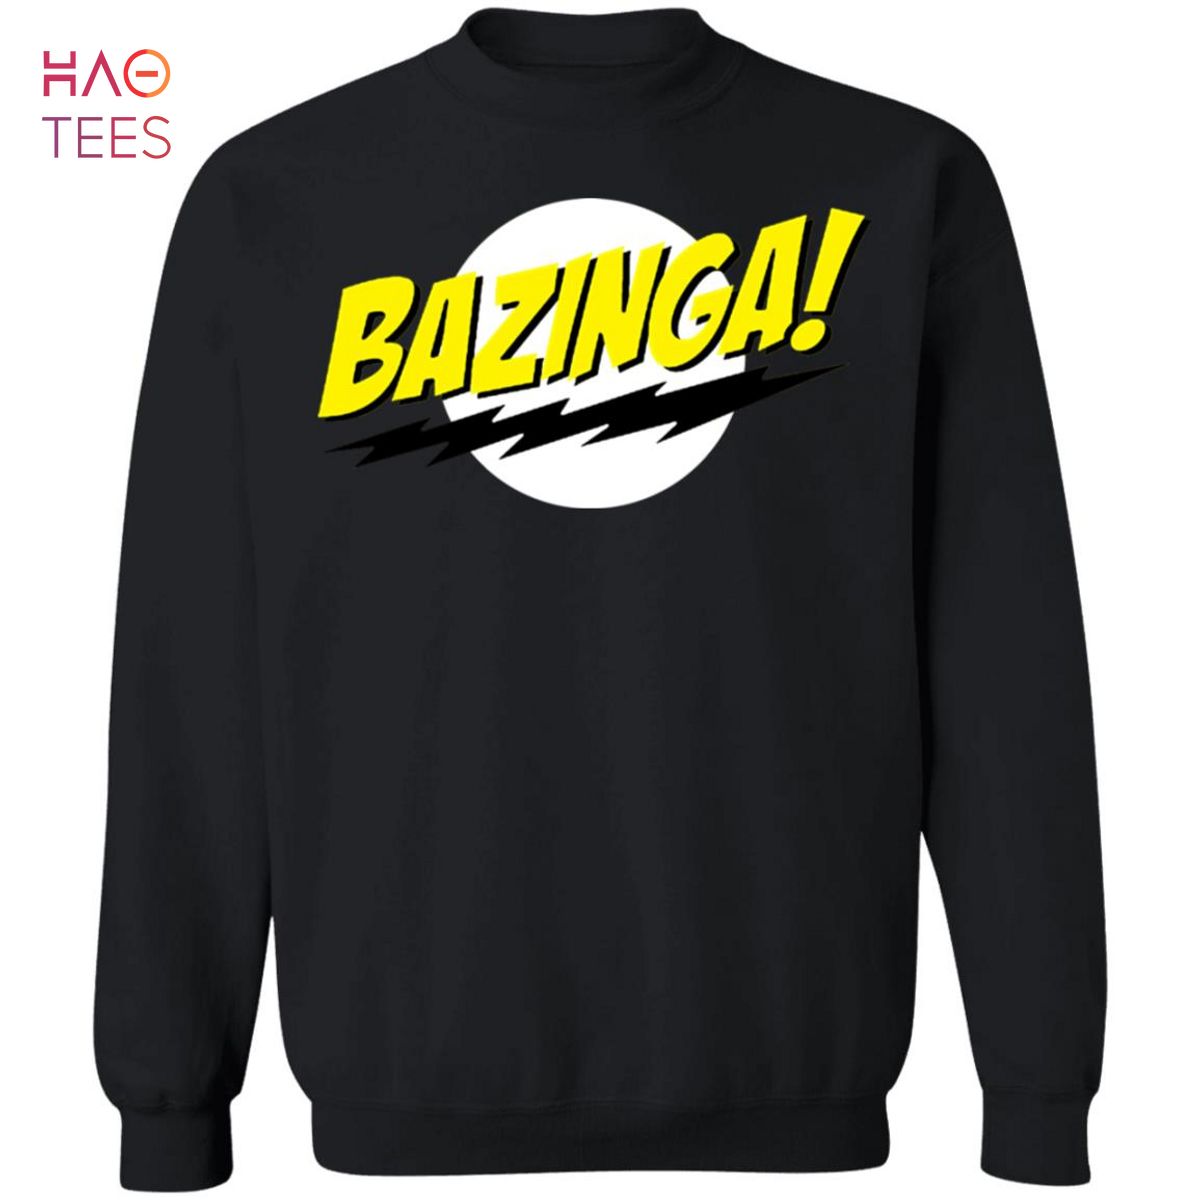 BEST Bazinga Sweater